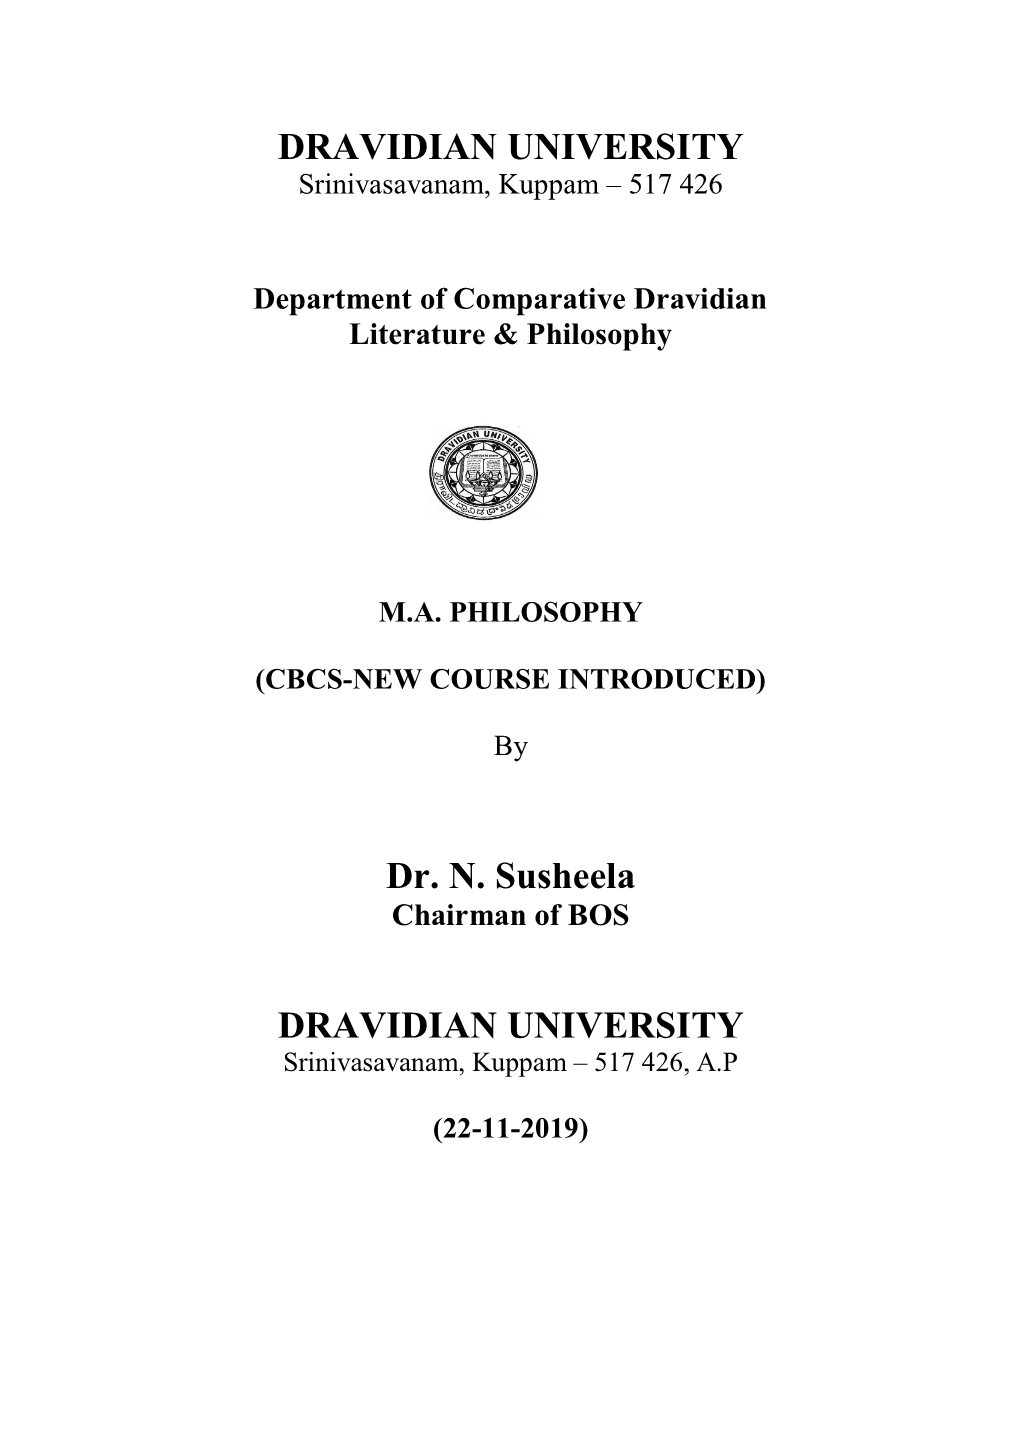 DRAVIDIAN UNIVERSITY Kuppam – 517 425 (A.P) Two Years M.A